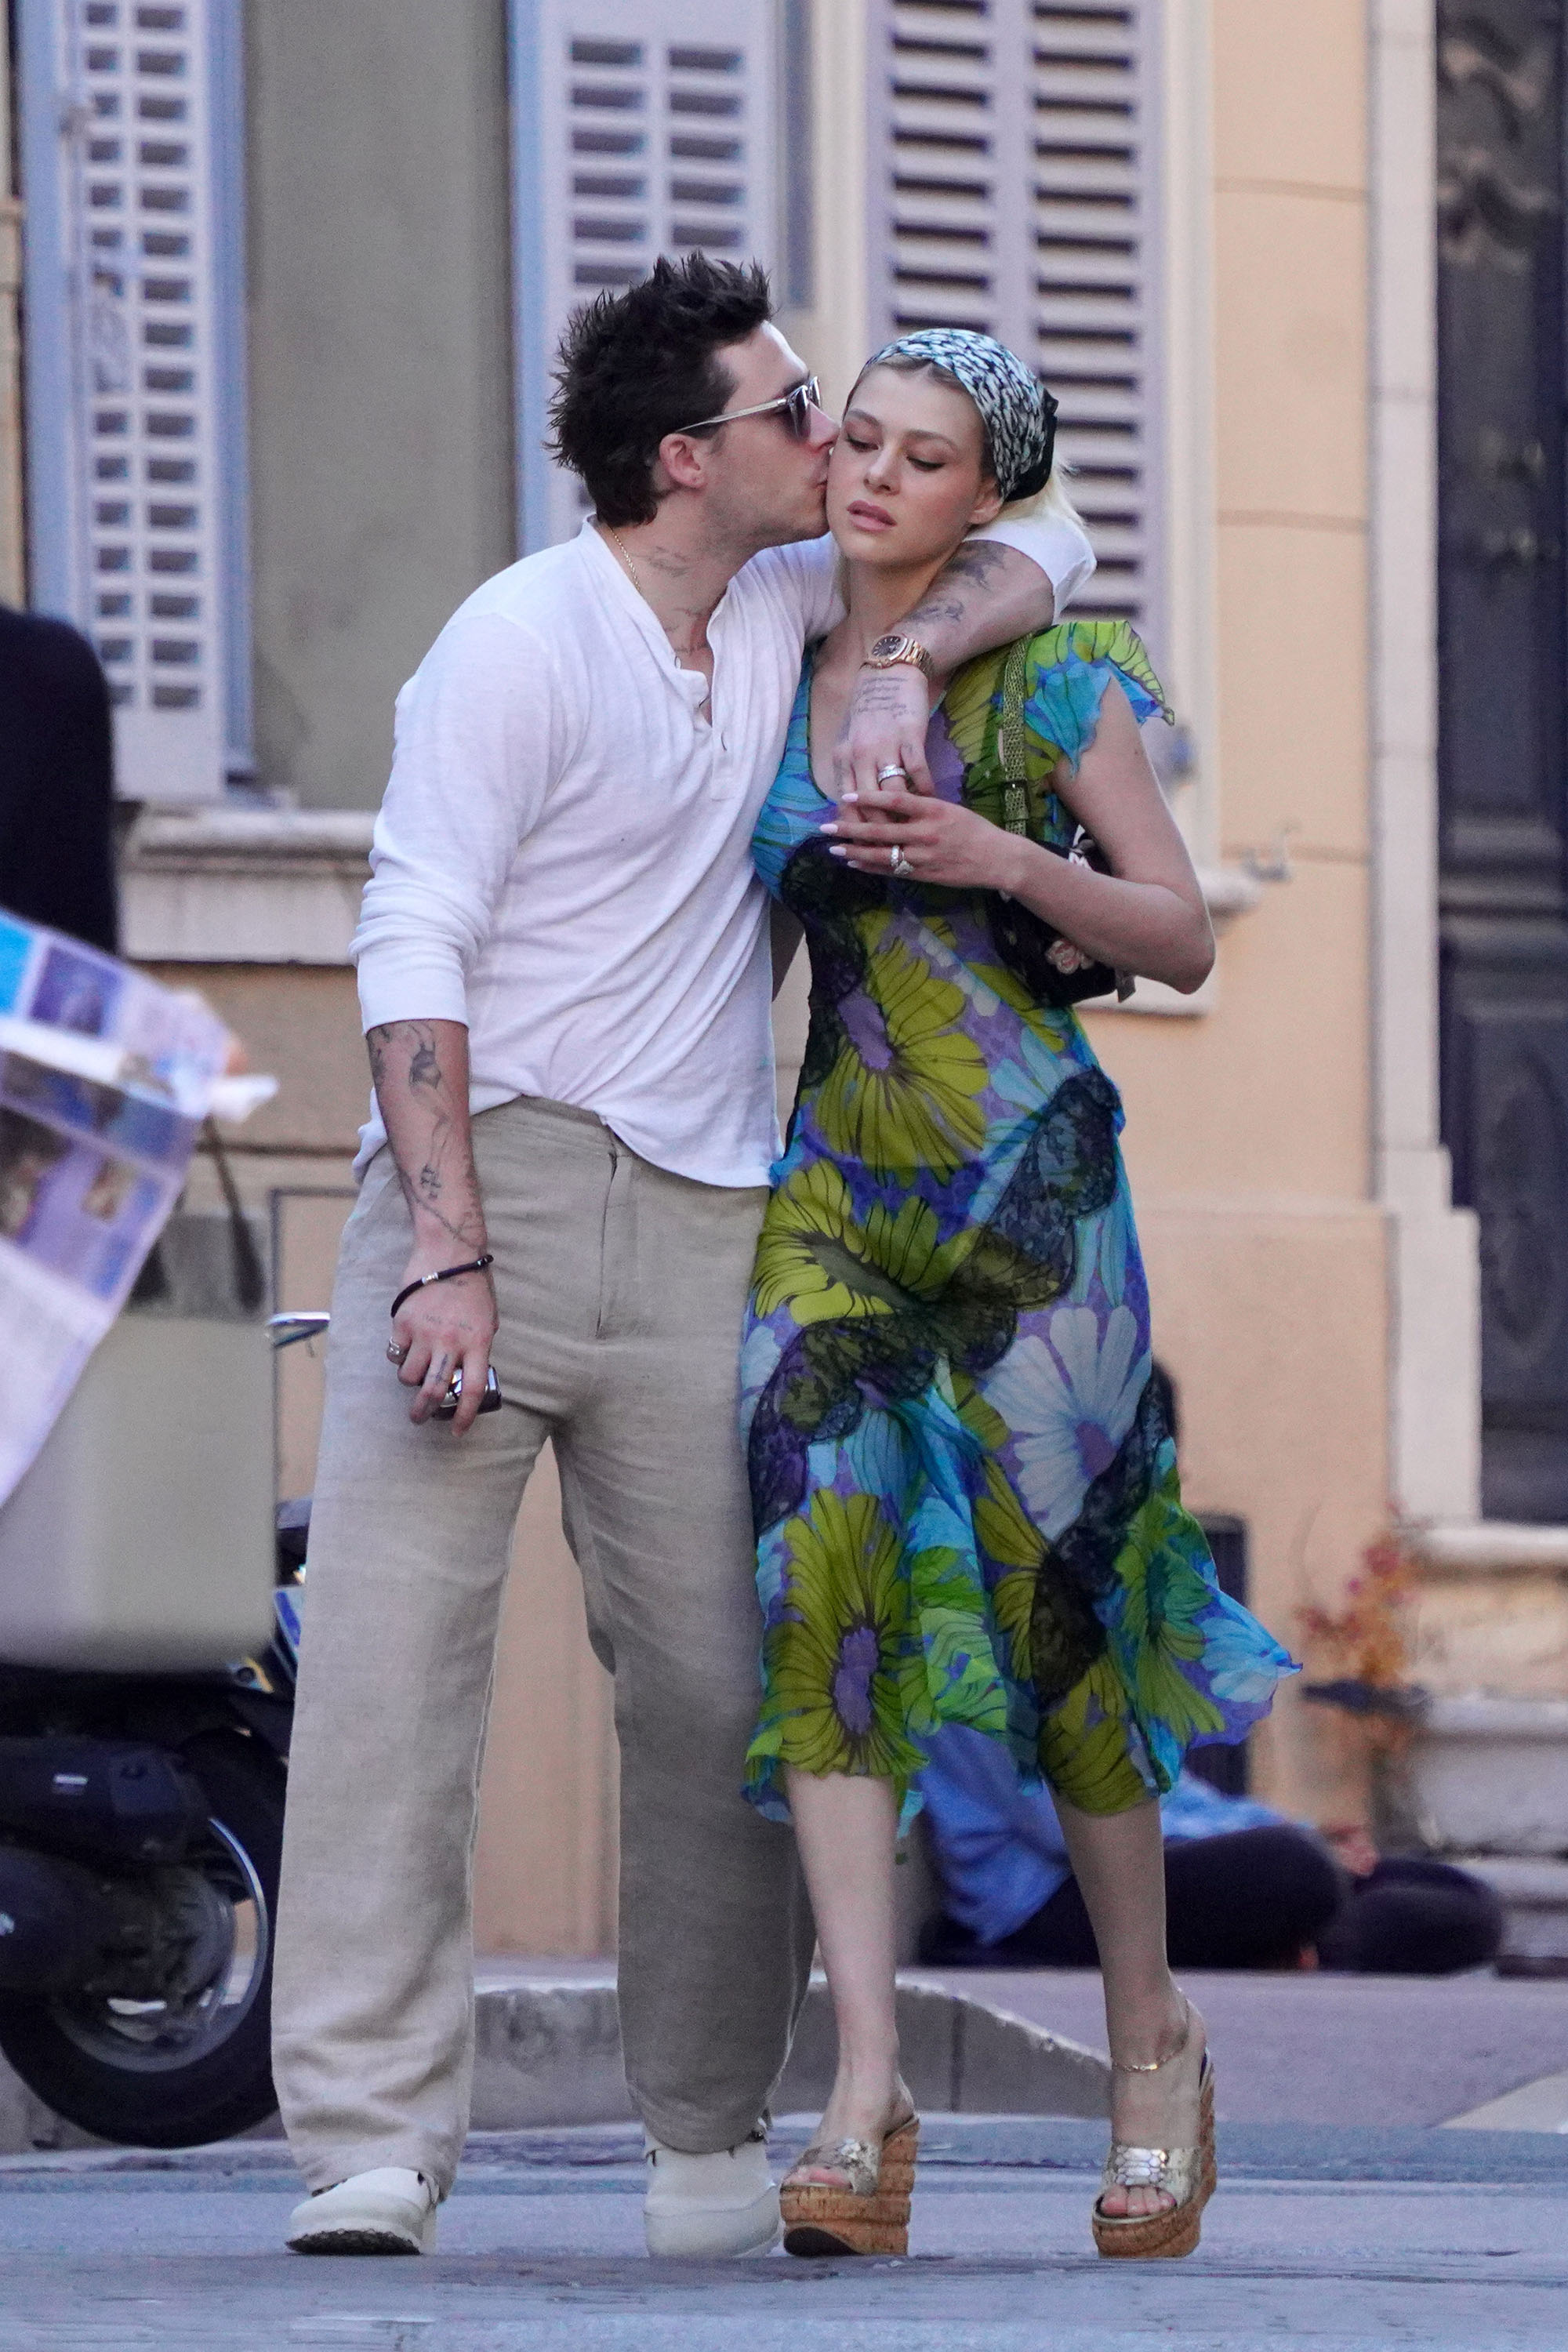 Brooklyn Beckham gives wife Nicola Peltz a big smooch as they vacation in St. Tropez